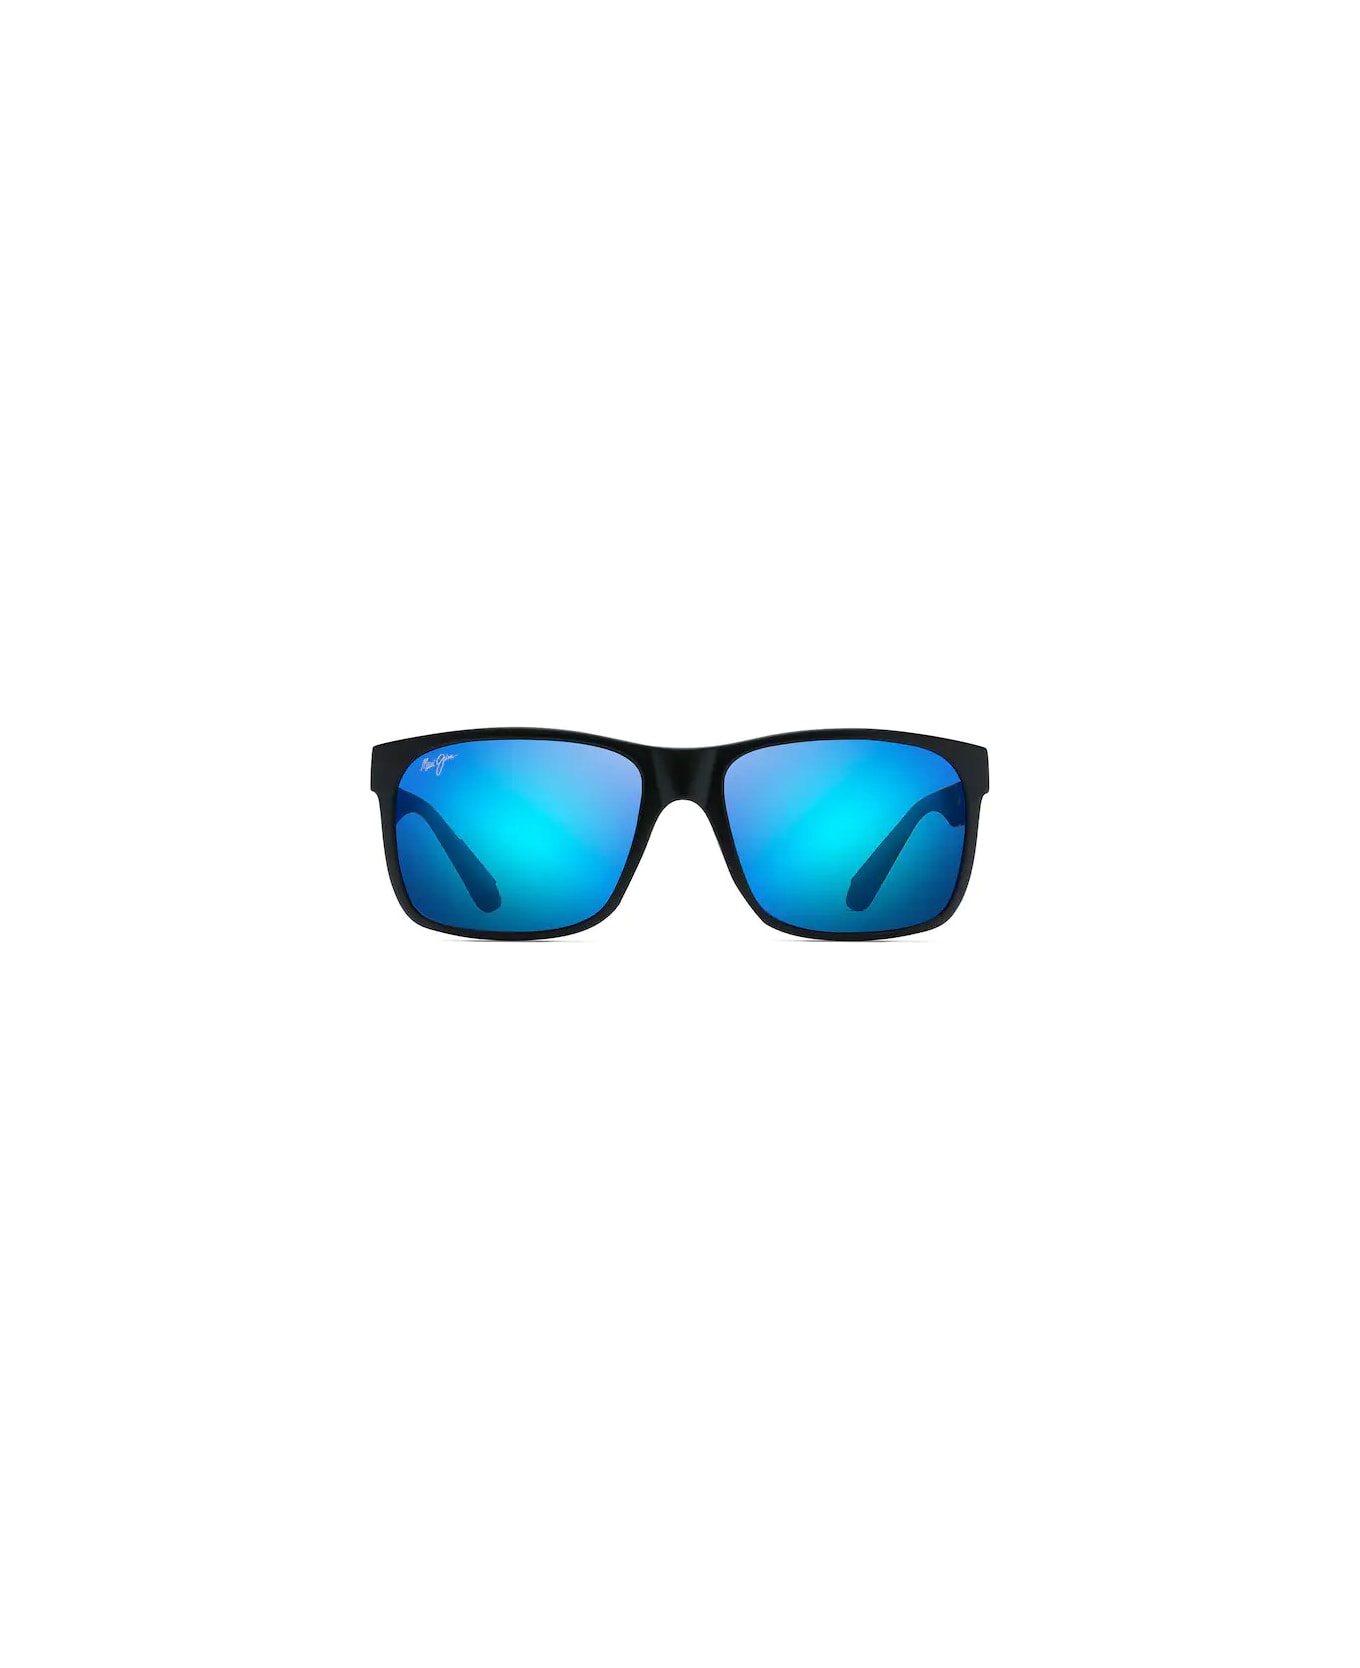 Maui Jim Red sands B432-2M Sunglasses - Nero lente blu